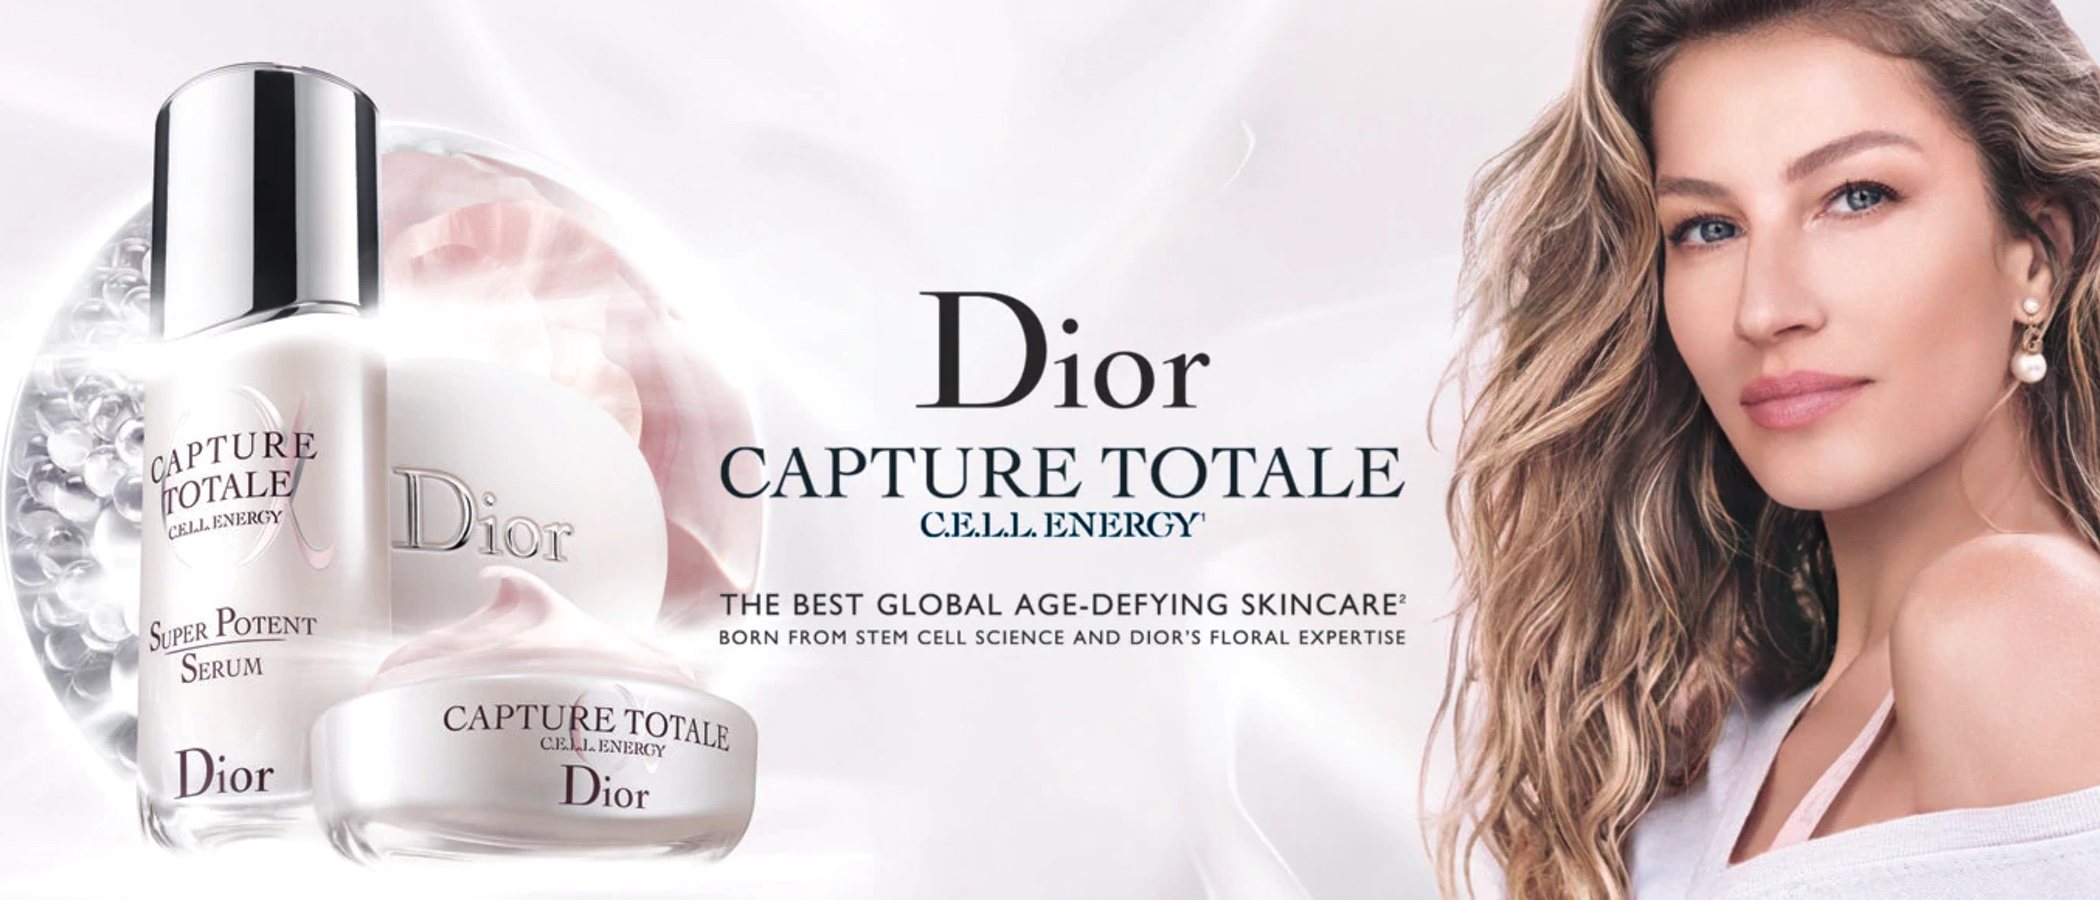 Dior presenta 'Capture Totale' de la mano de Gisele Bündchen